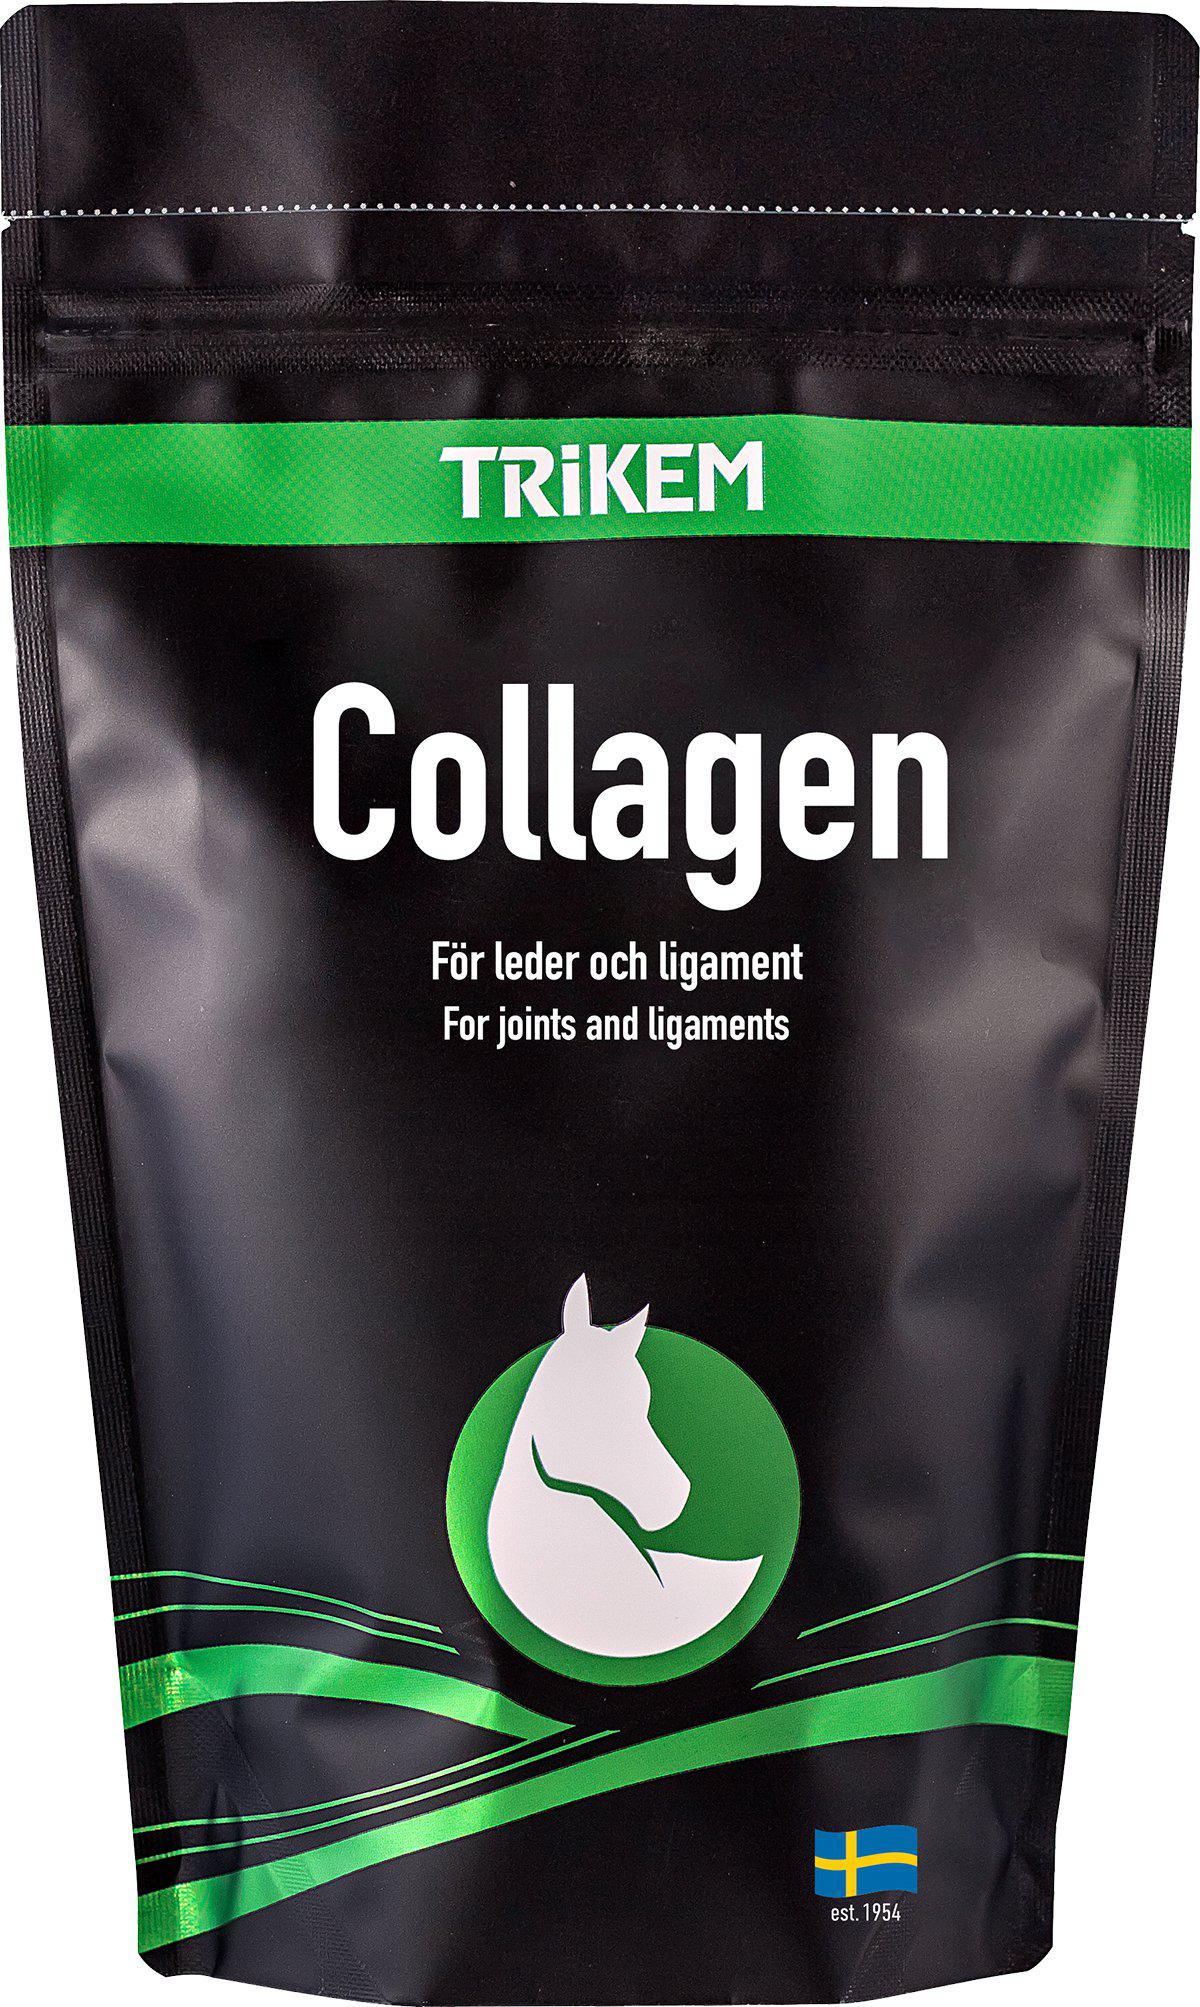 TRIKEM - Vimitalcollagen Ps 600Gr - (822.7330)